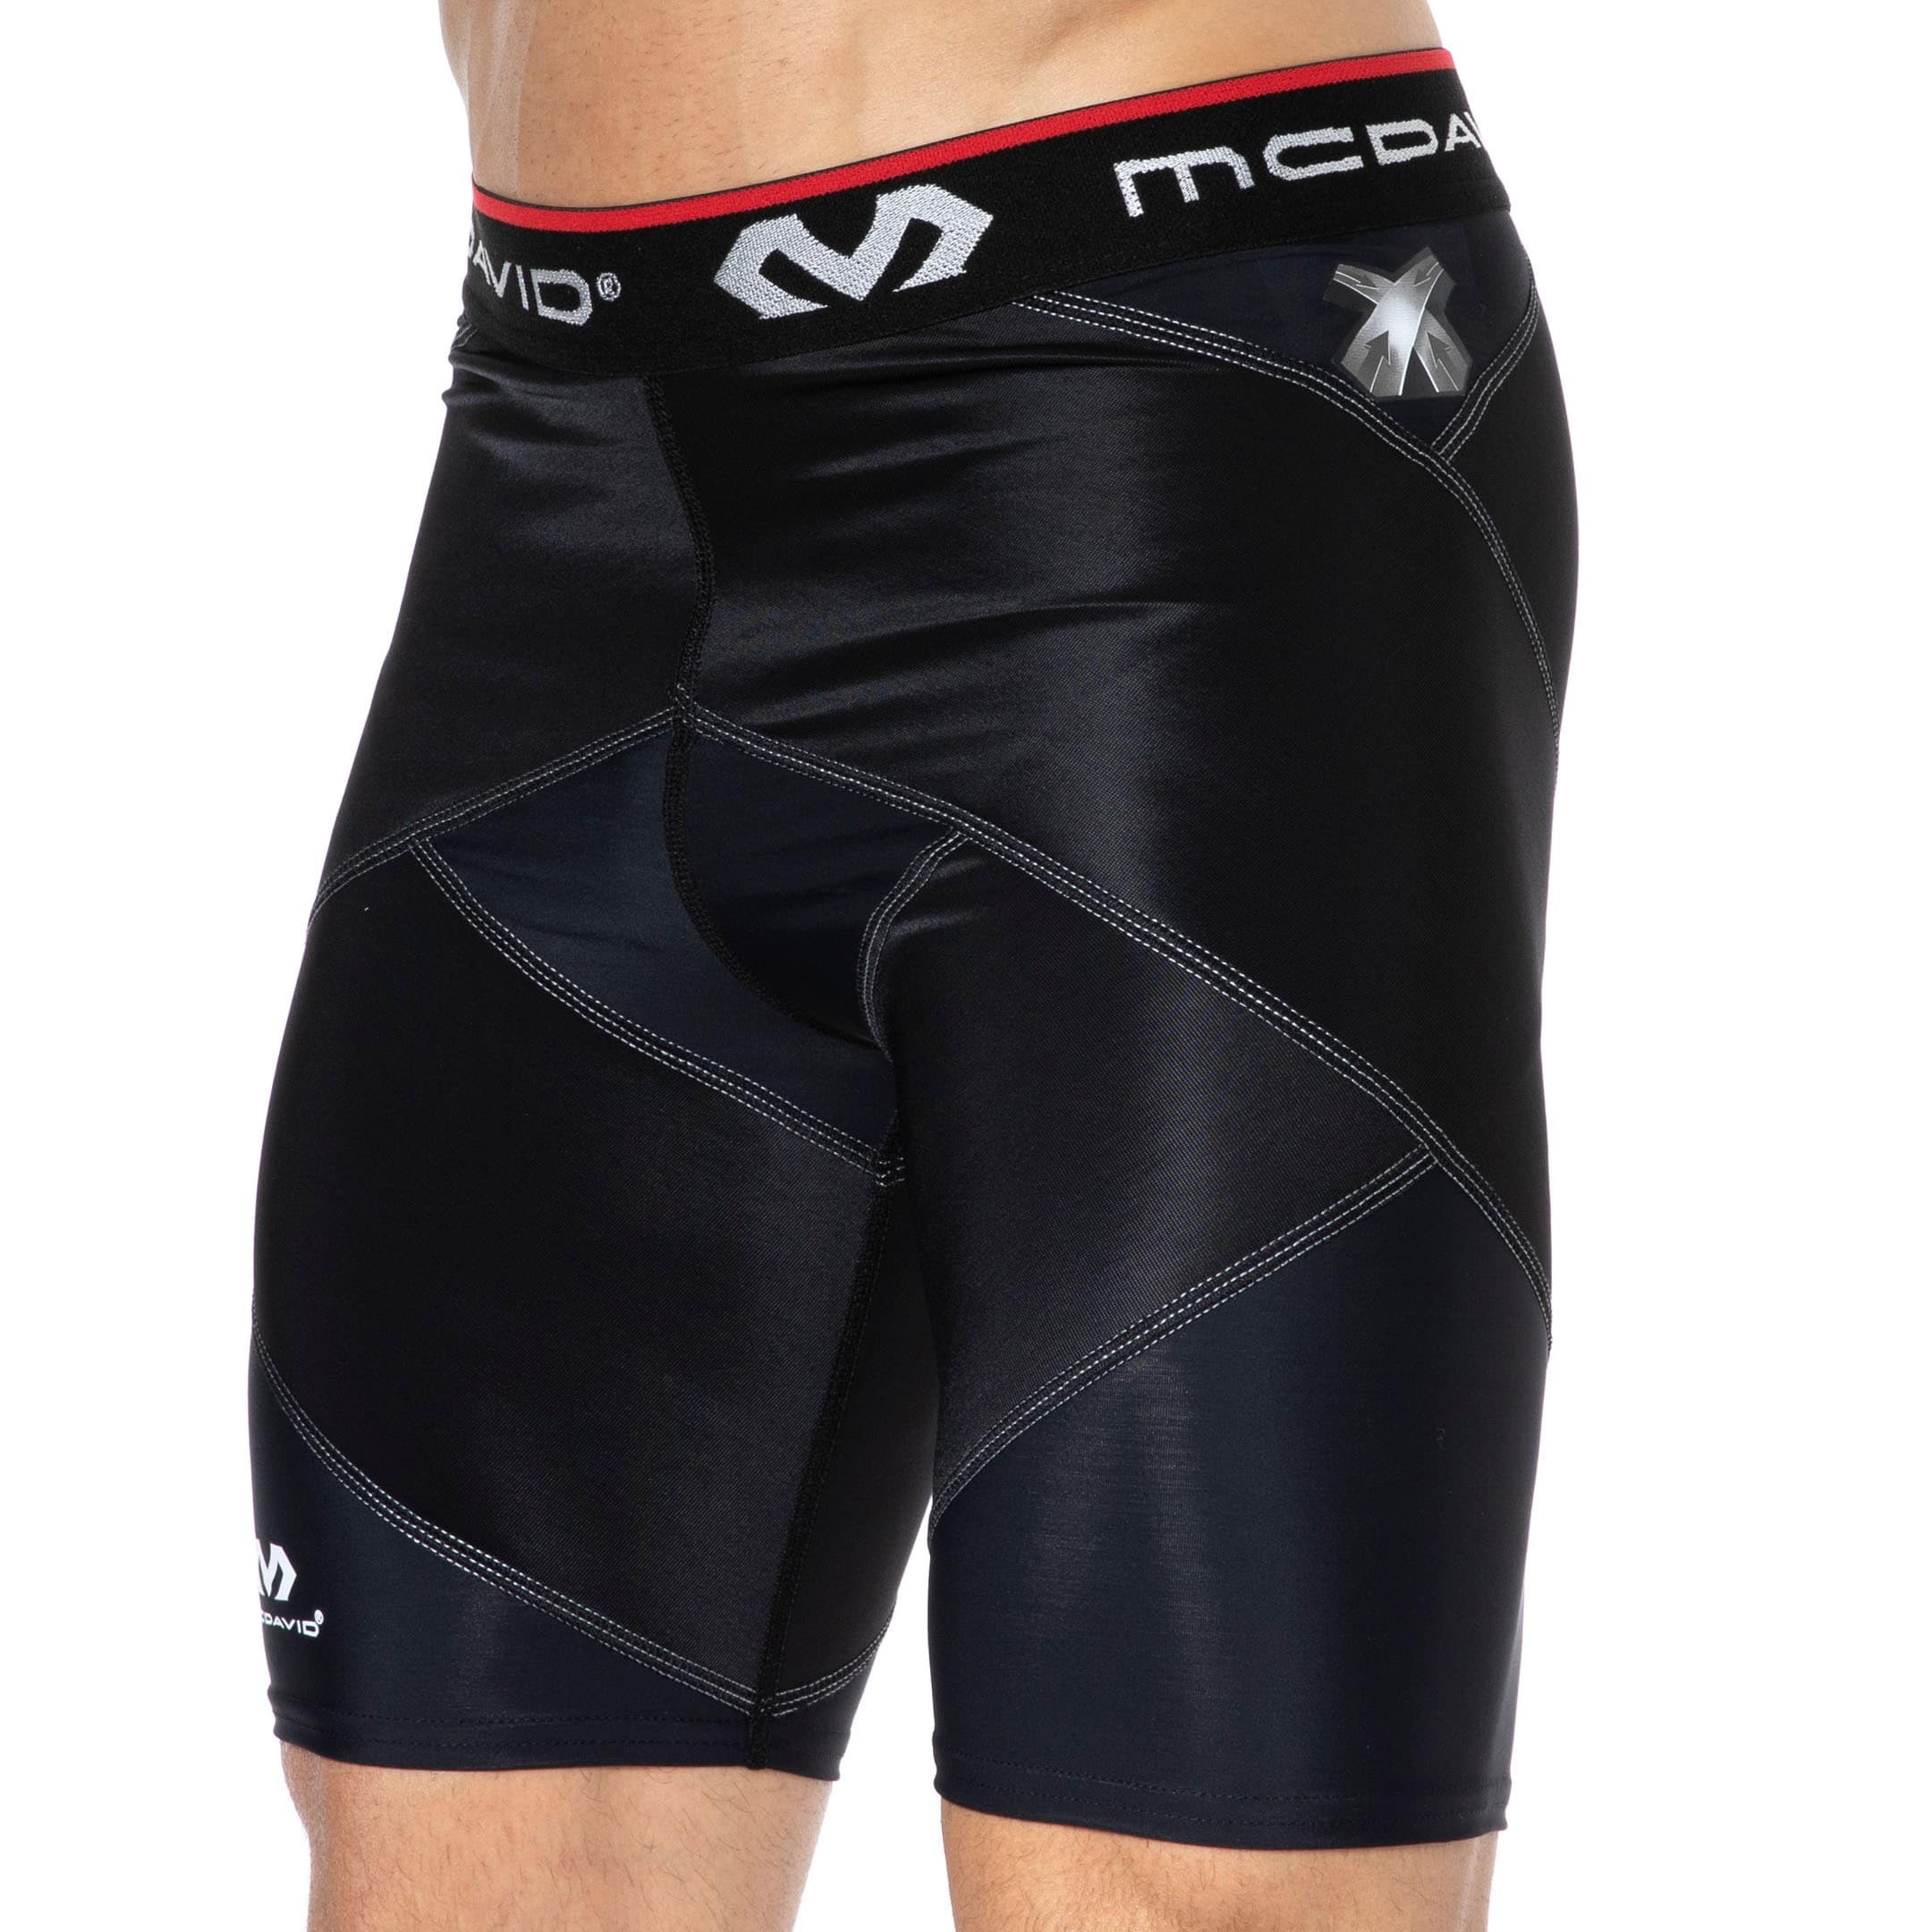 McDavid Cross Compression Shorts - Black | INDERWEAR